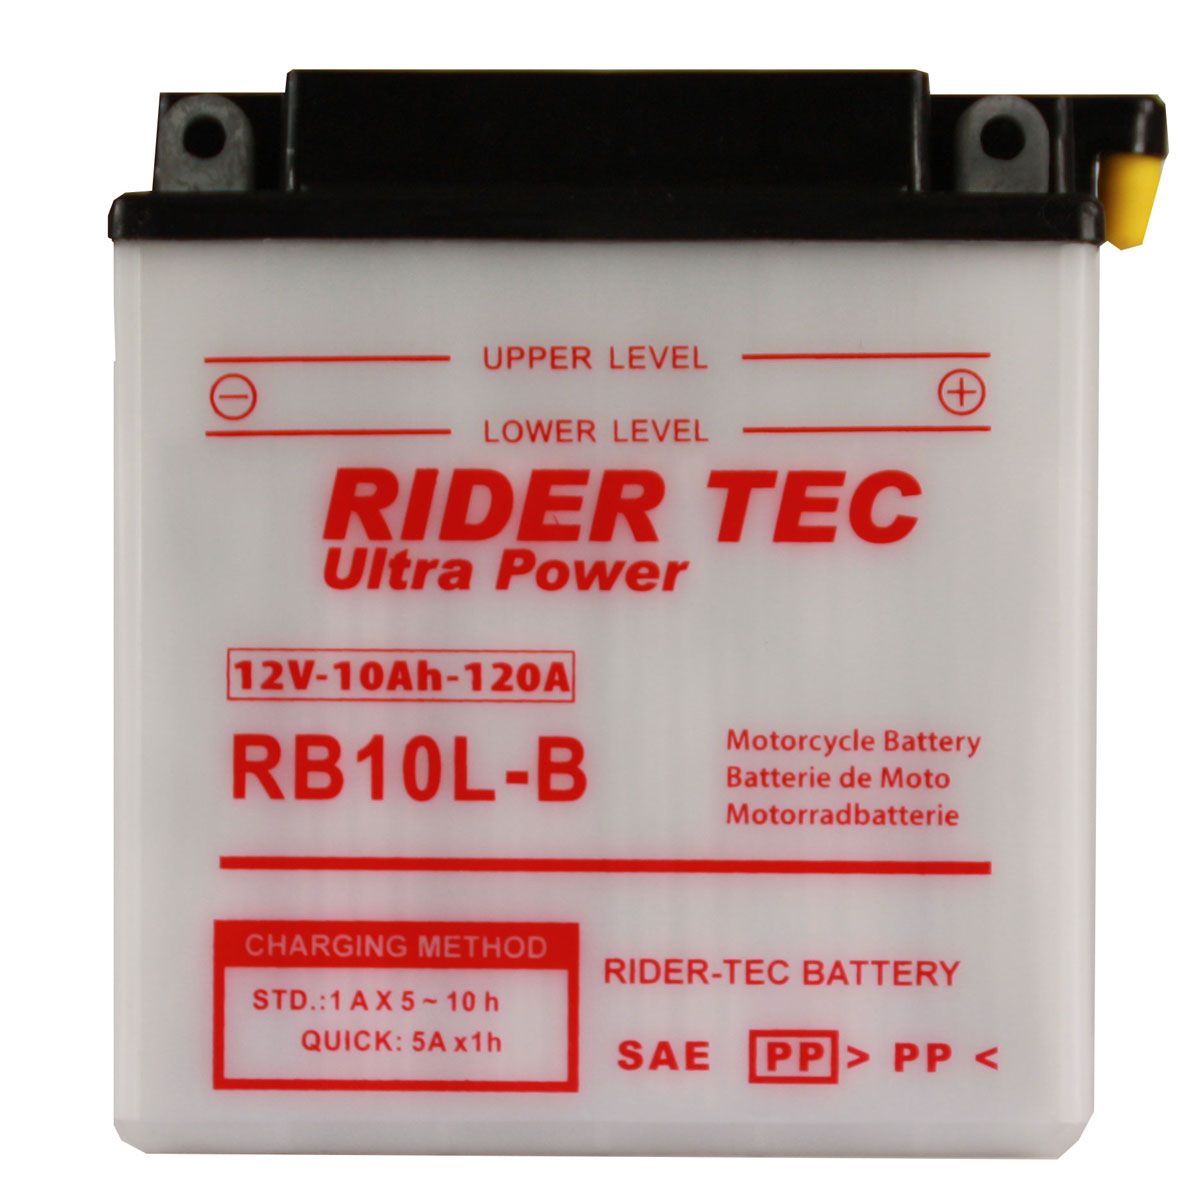 Loisiro - Batterie Moto RB10L-B Conventionnelle 12V 10Ah 120A - RIDER-TEC